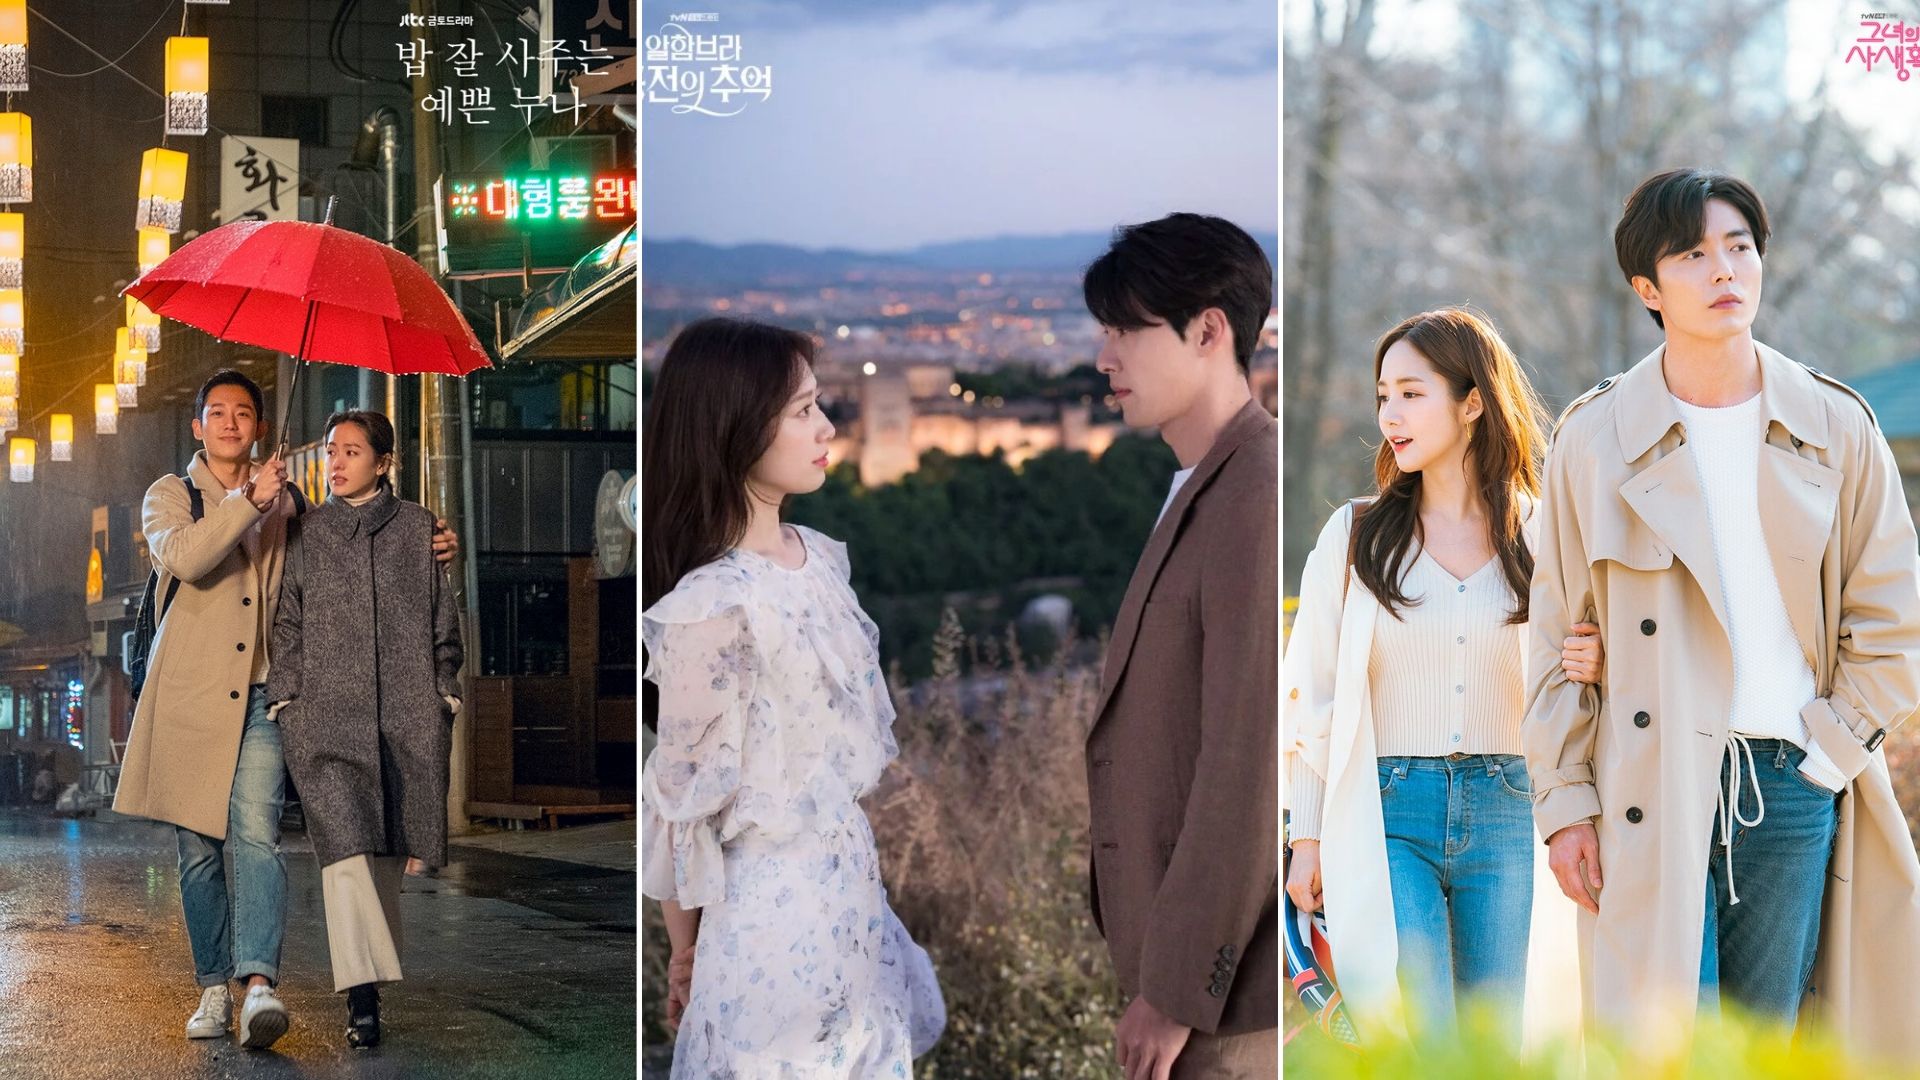 12 K Dramas On Netflix To Binge Watch After Crash Landing On You Klook Travel Blog Best korean dramas to watch in 2021 that are ongoing 8. 12 k dramas on netflix to binge watch